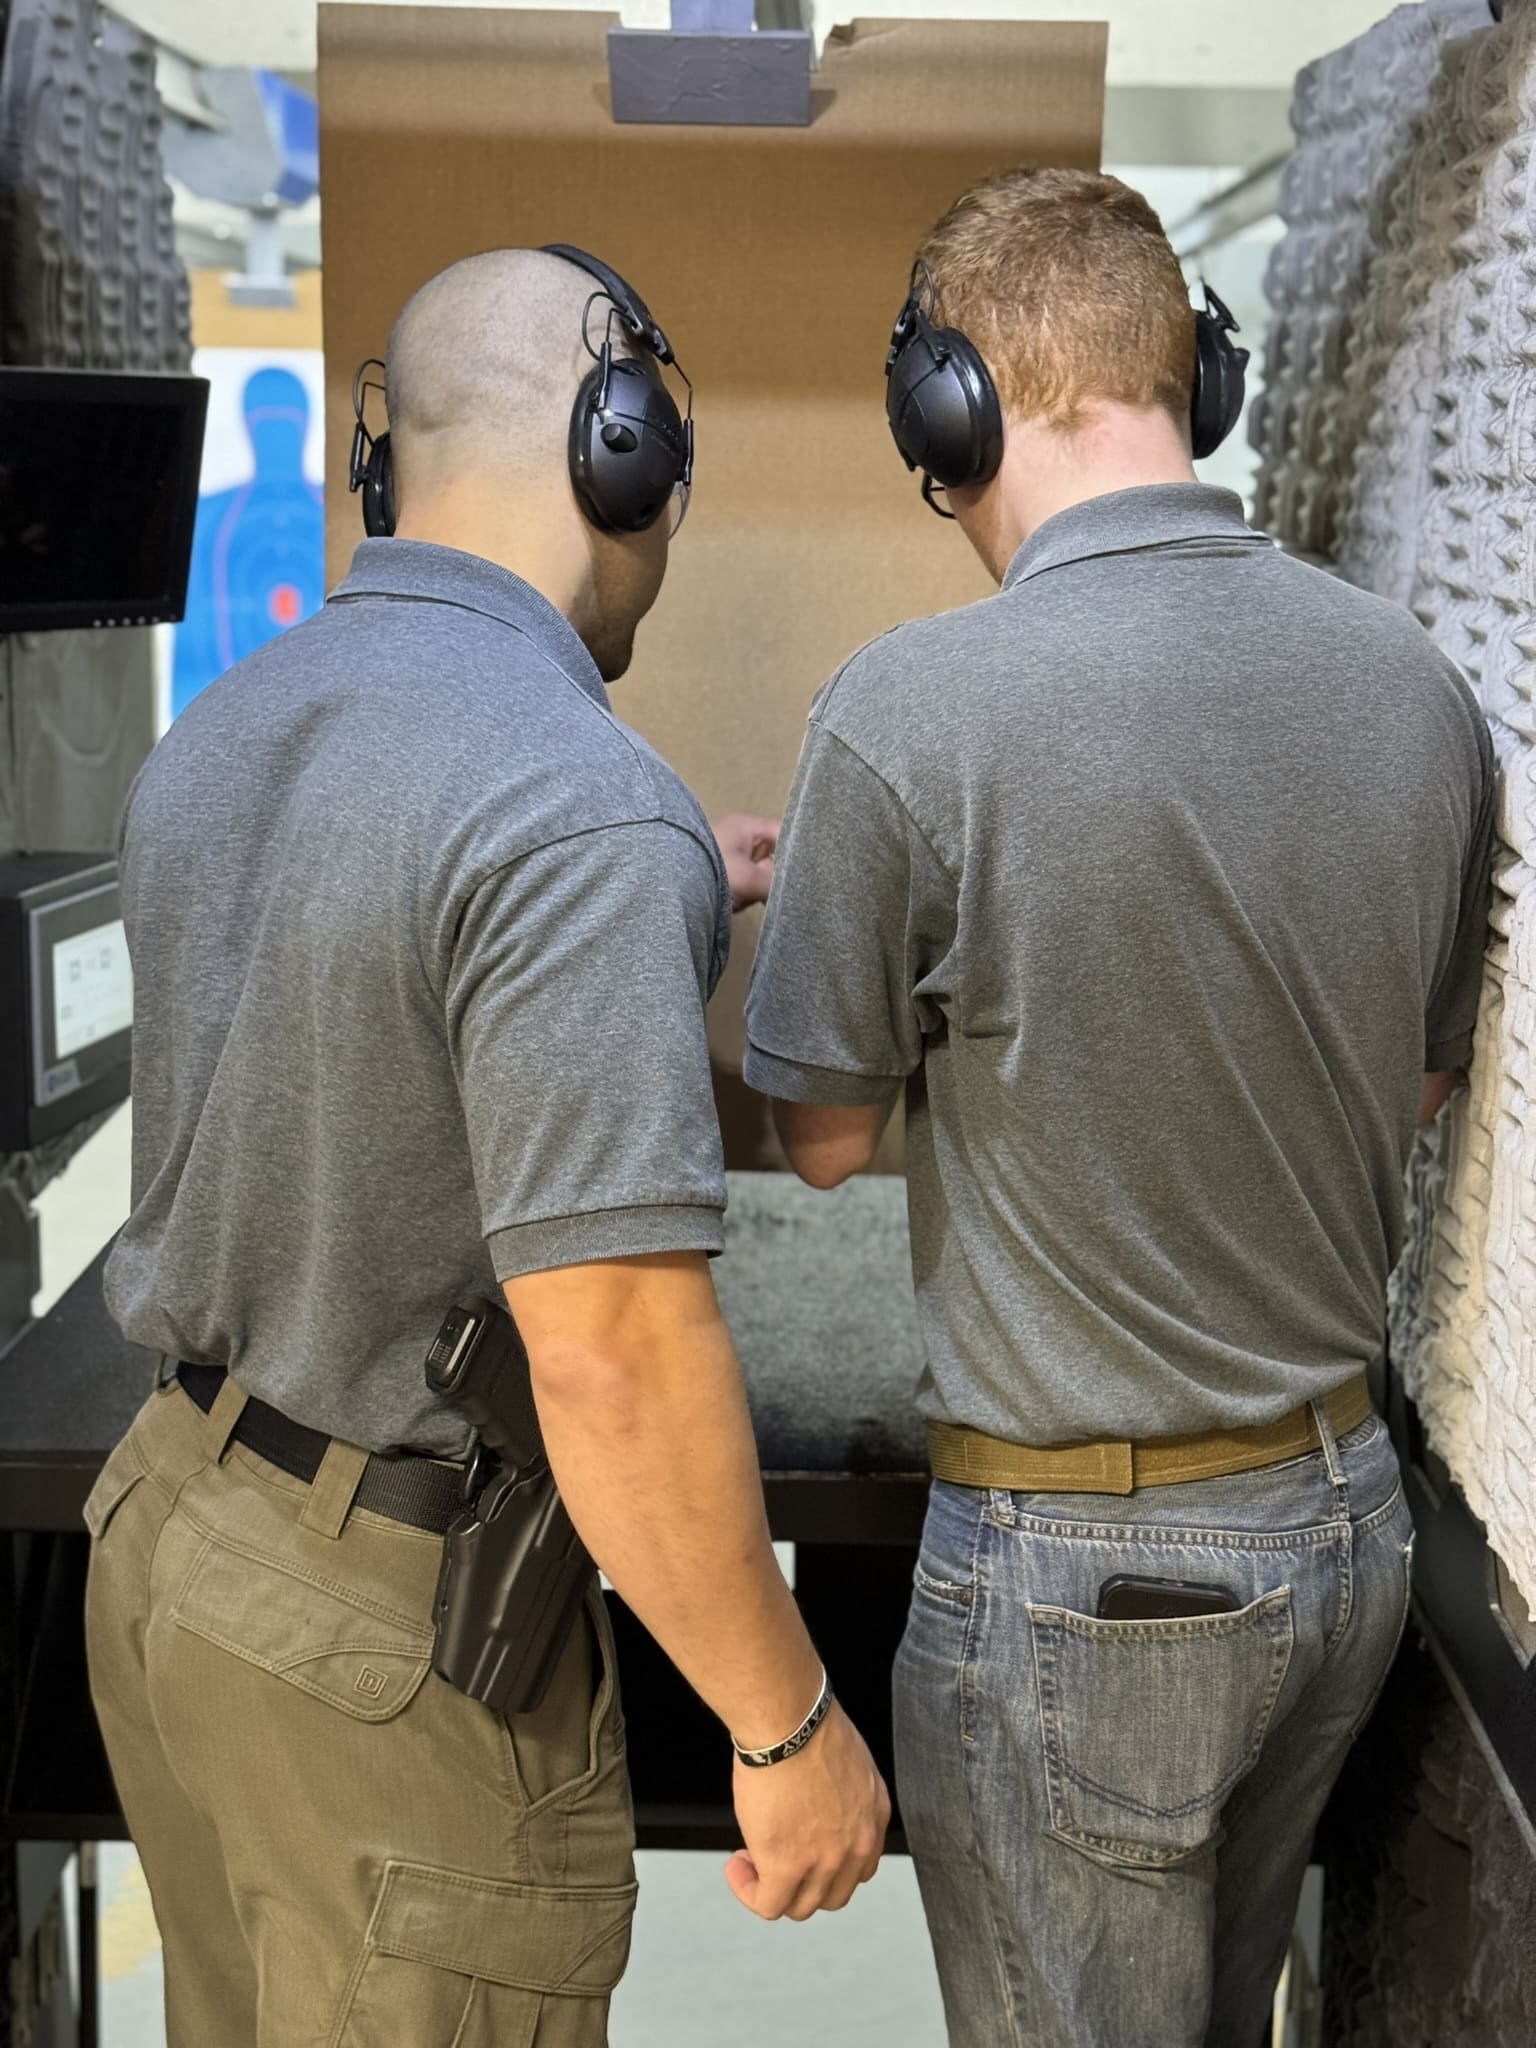 Range Master and Armorer at the indoor gun range